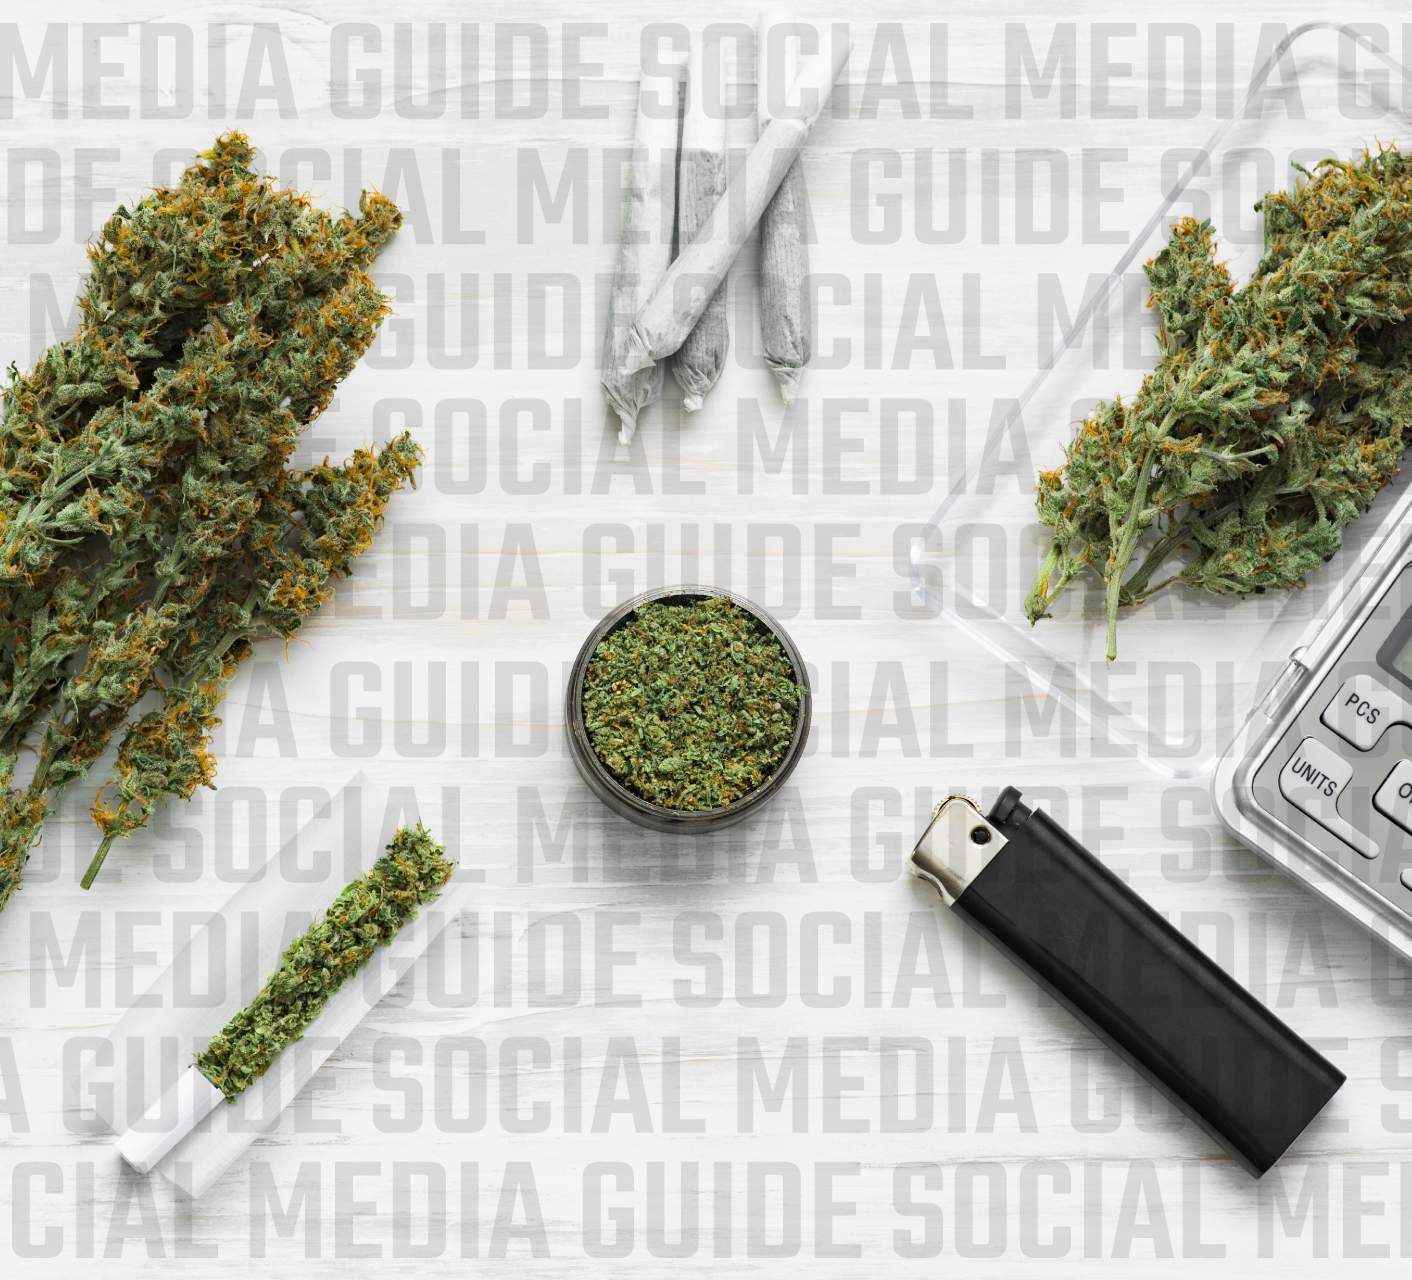 The Cannabis Dispensary Social Media Guide image